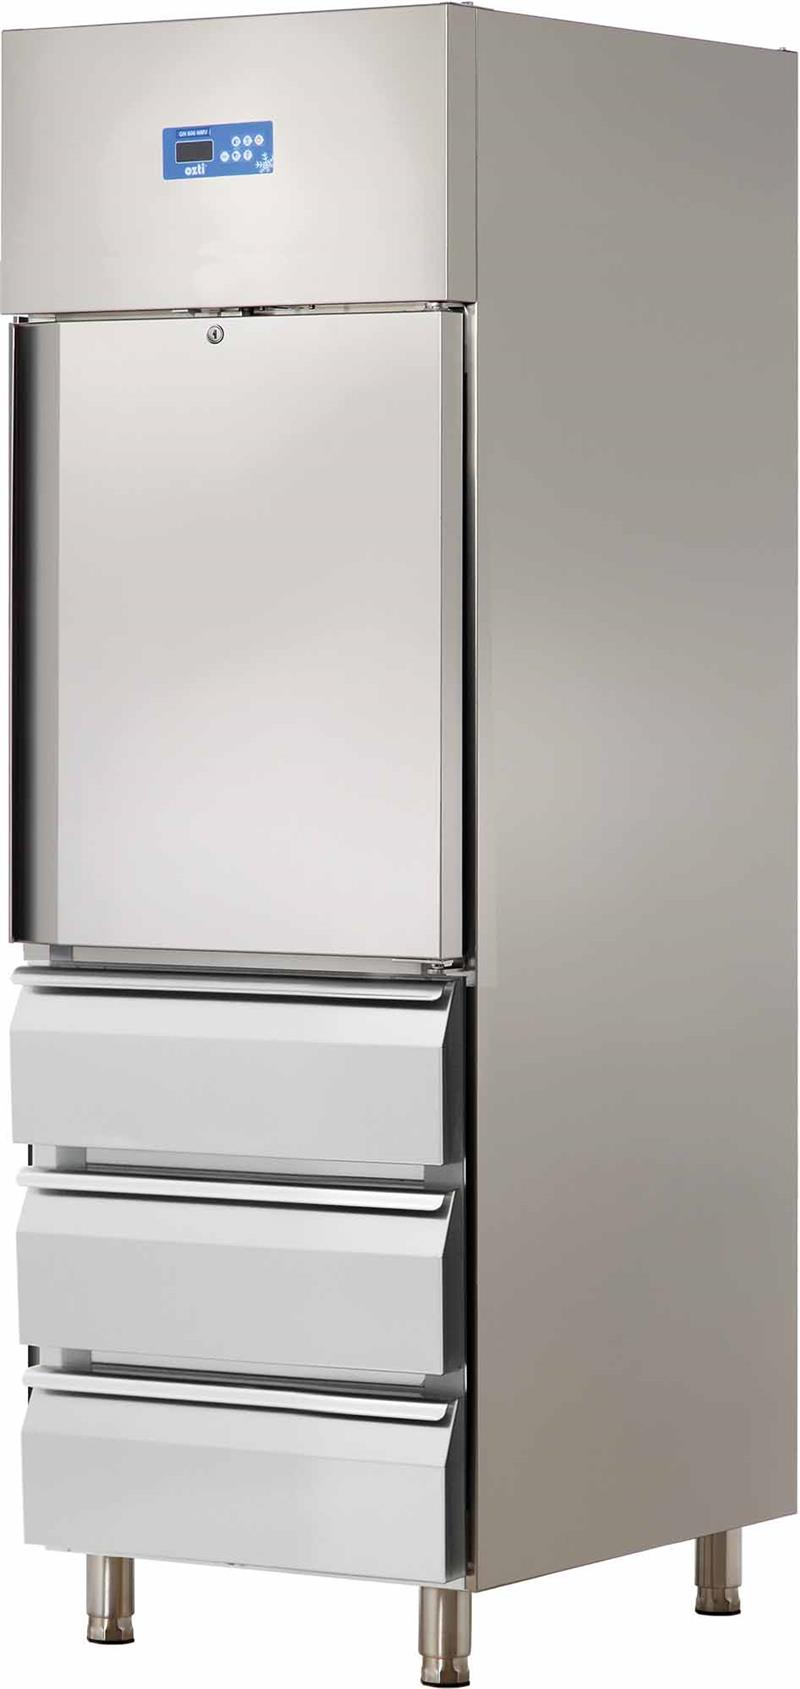 Stainless Steel Single Door Three Drawer Refrigerator (Vertical)